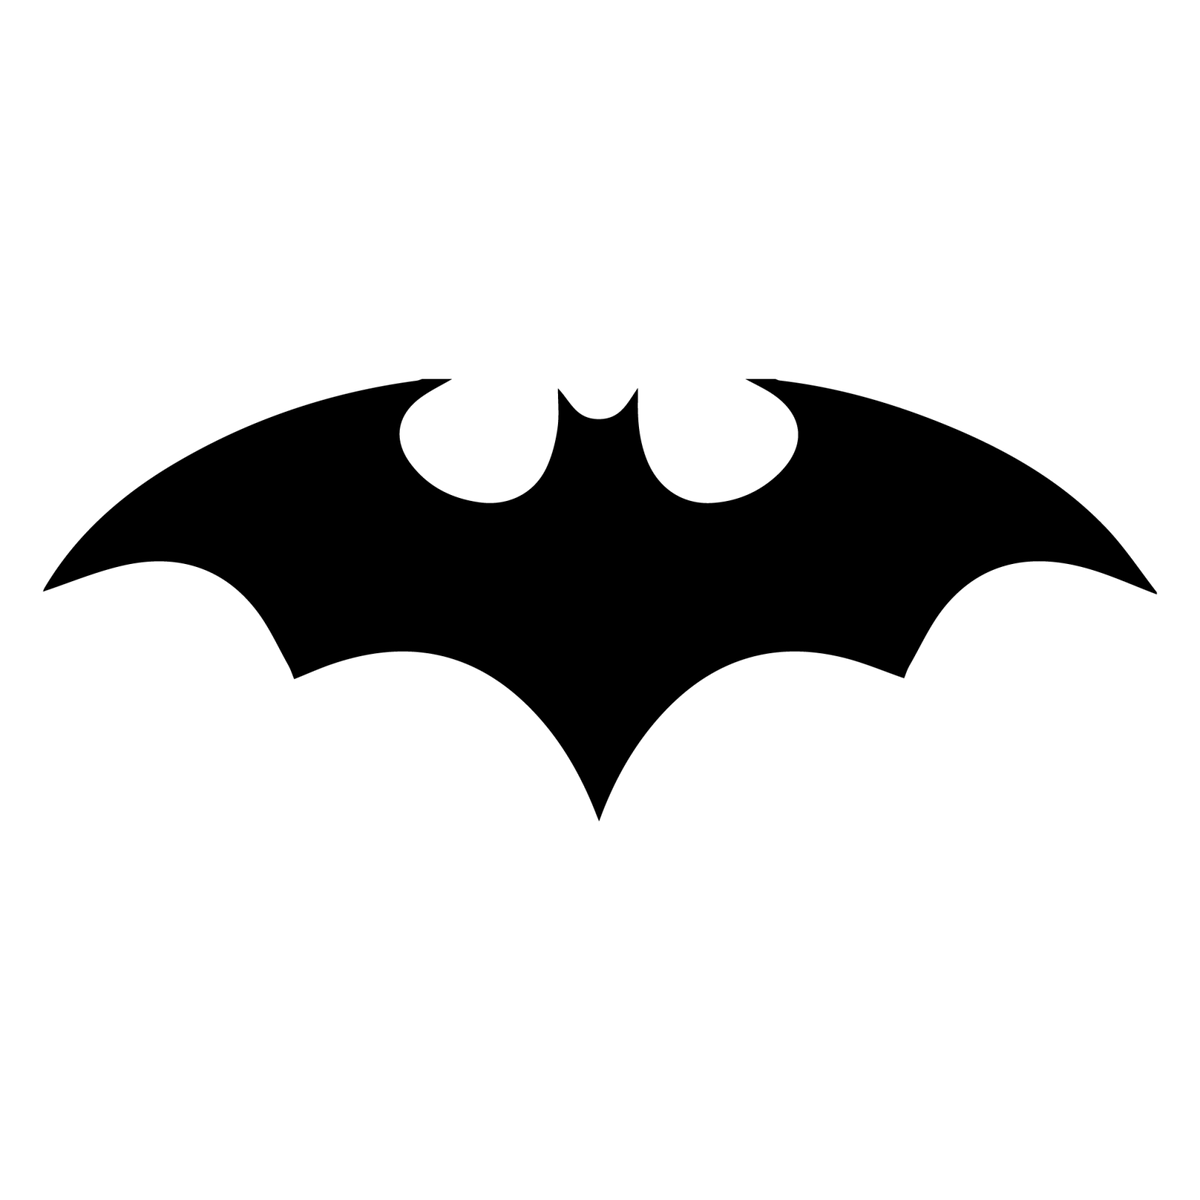 A stylized black Bat superhero symbol on a green background, resembling the Cover-Alls bat hero logo.